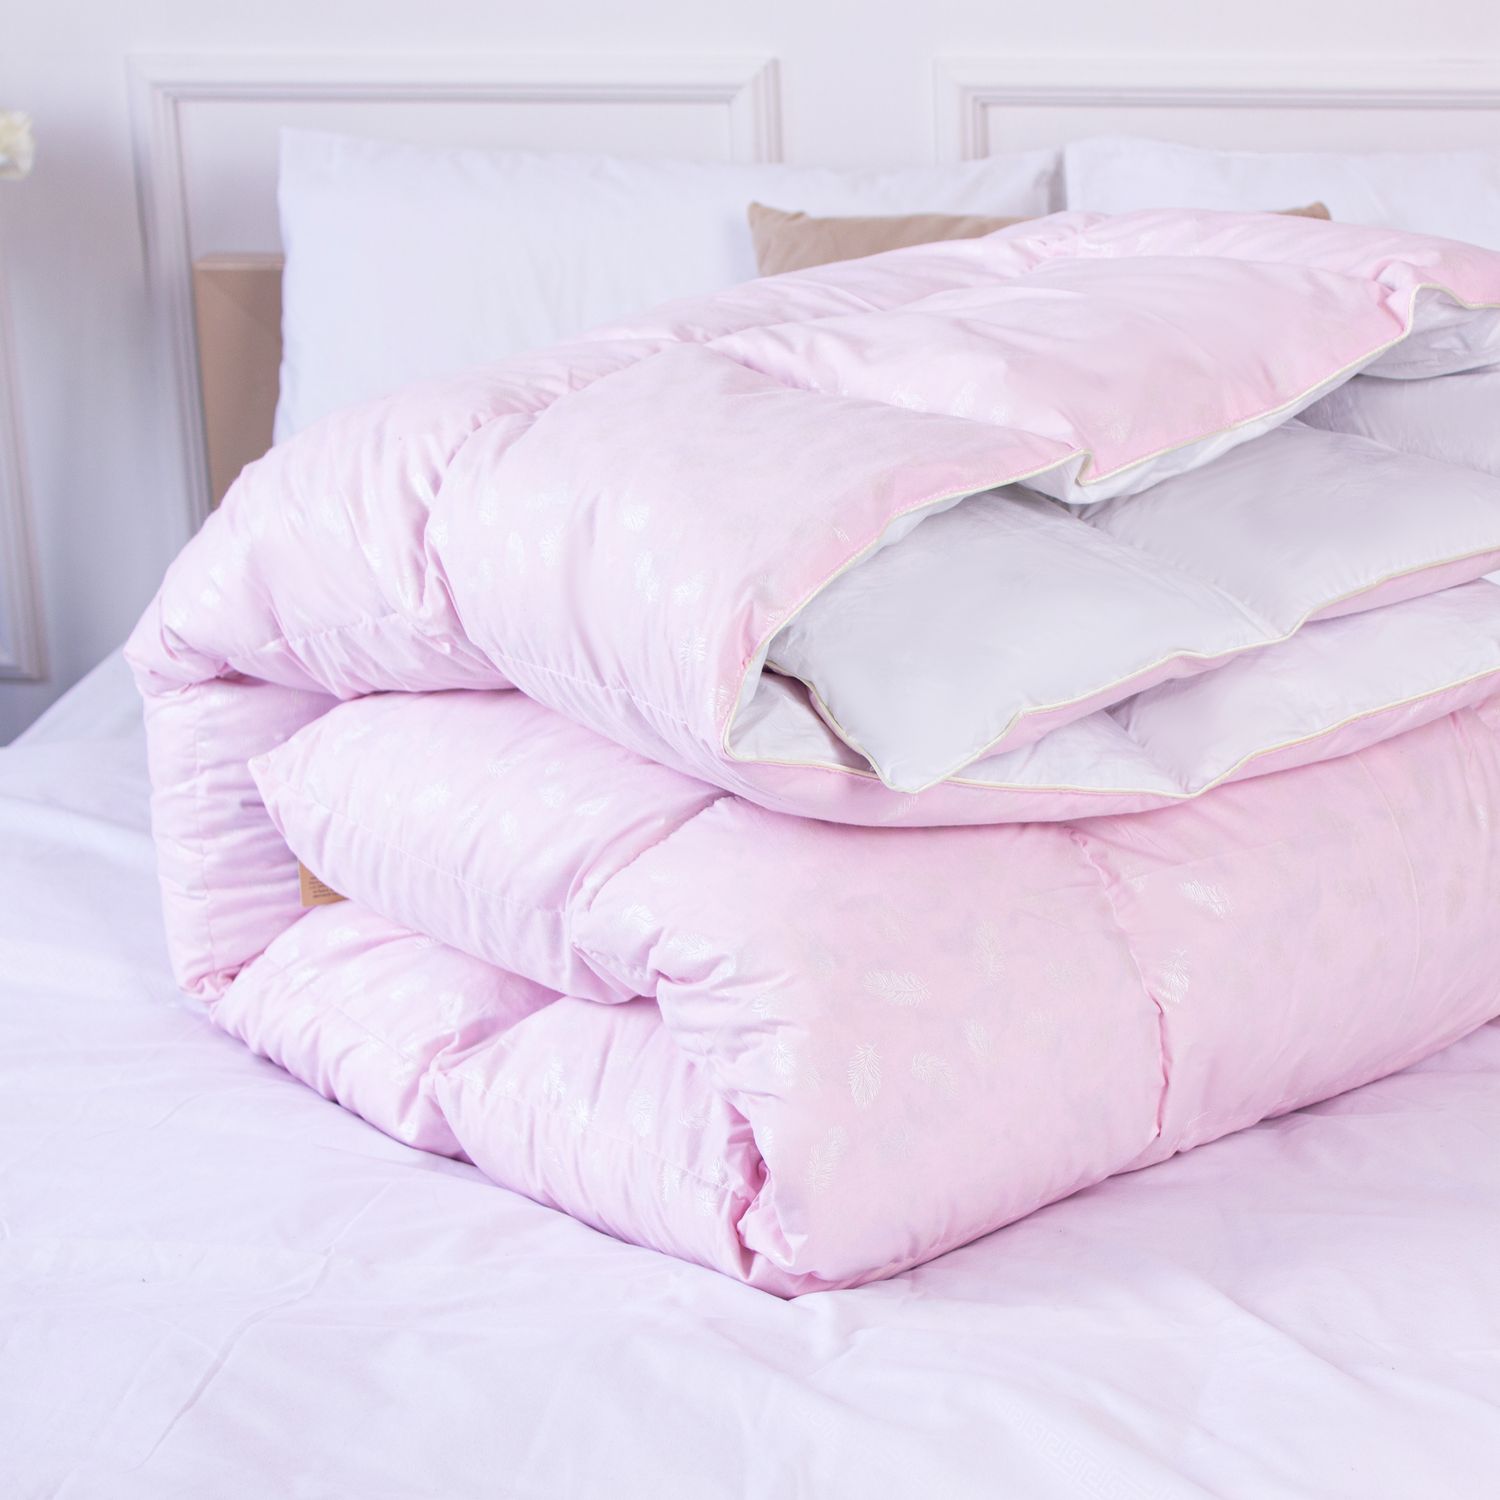 Одеяло пуховое MirSon Karmen №1853 Bio-Pink, 50% пух, полуторное, 215x155, розовое (2200003014754) - фото 3